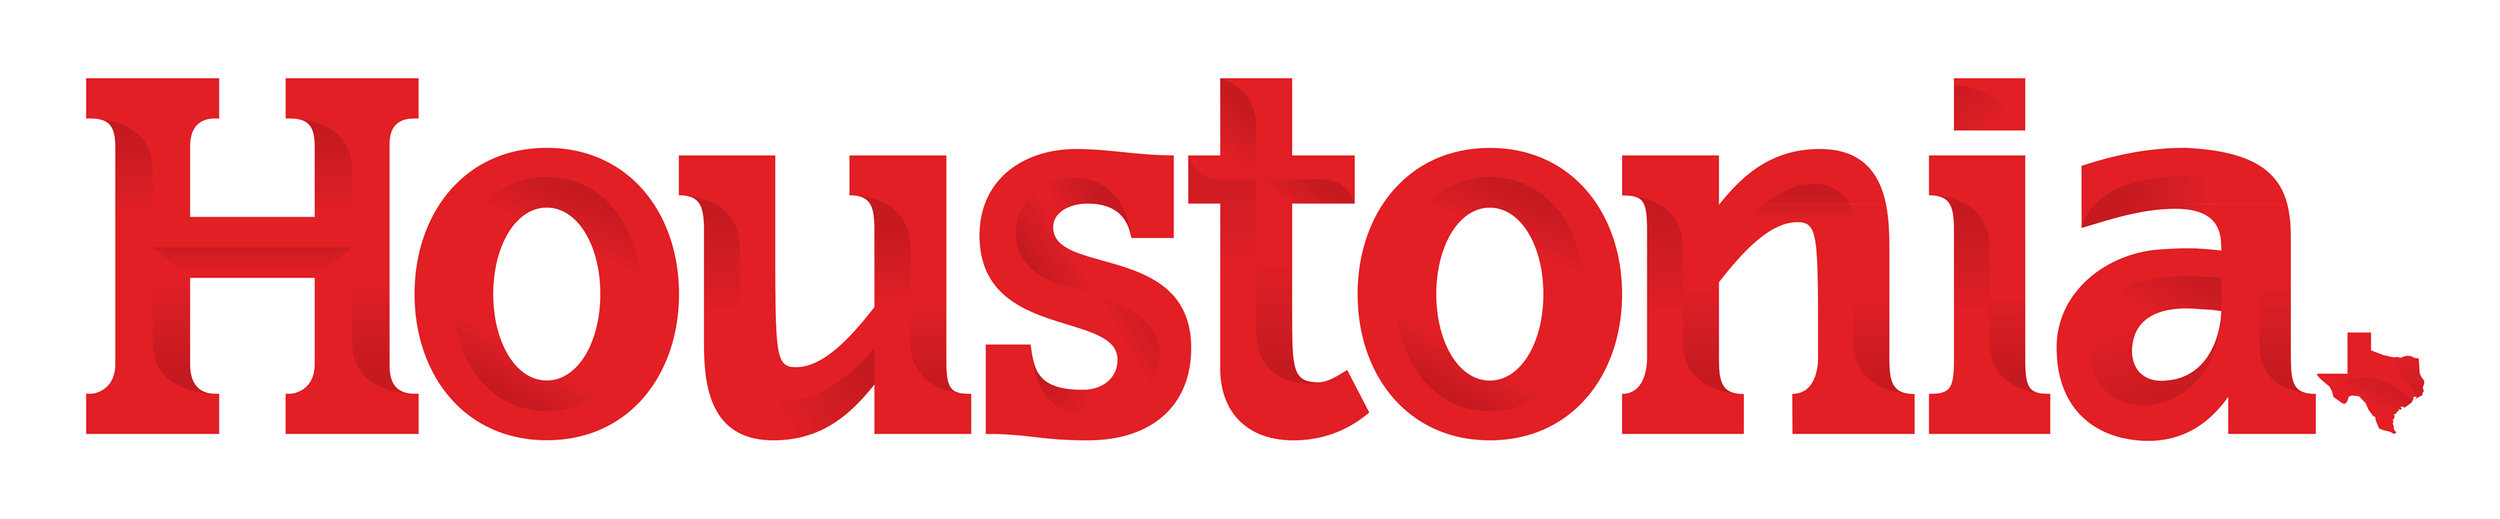 Houstonia_Logo_Red.jpg